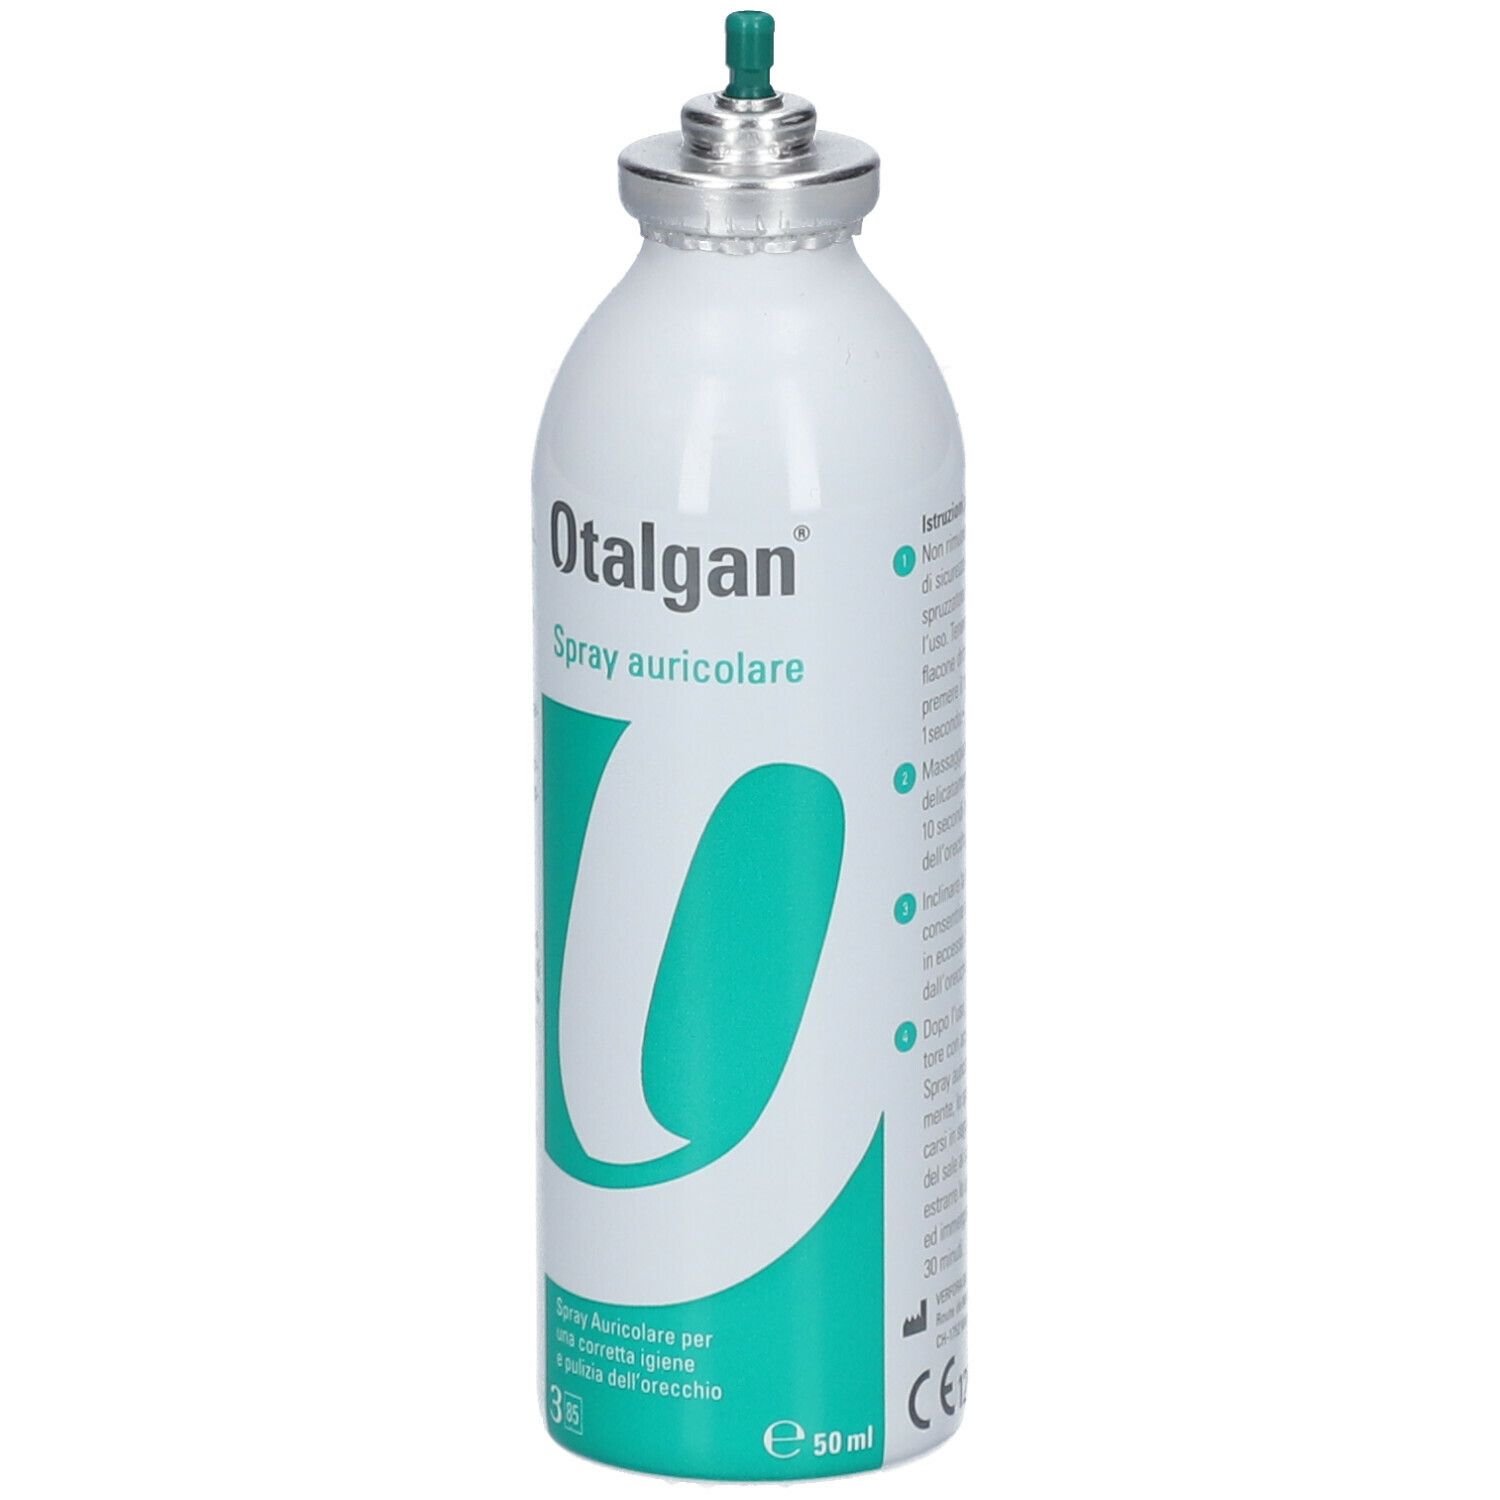 Otalgan® Spray Auricolare